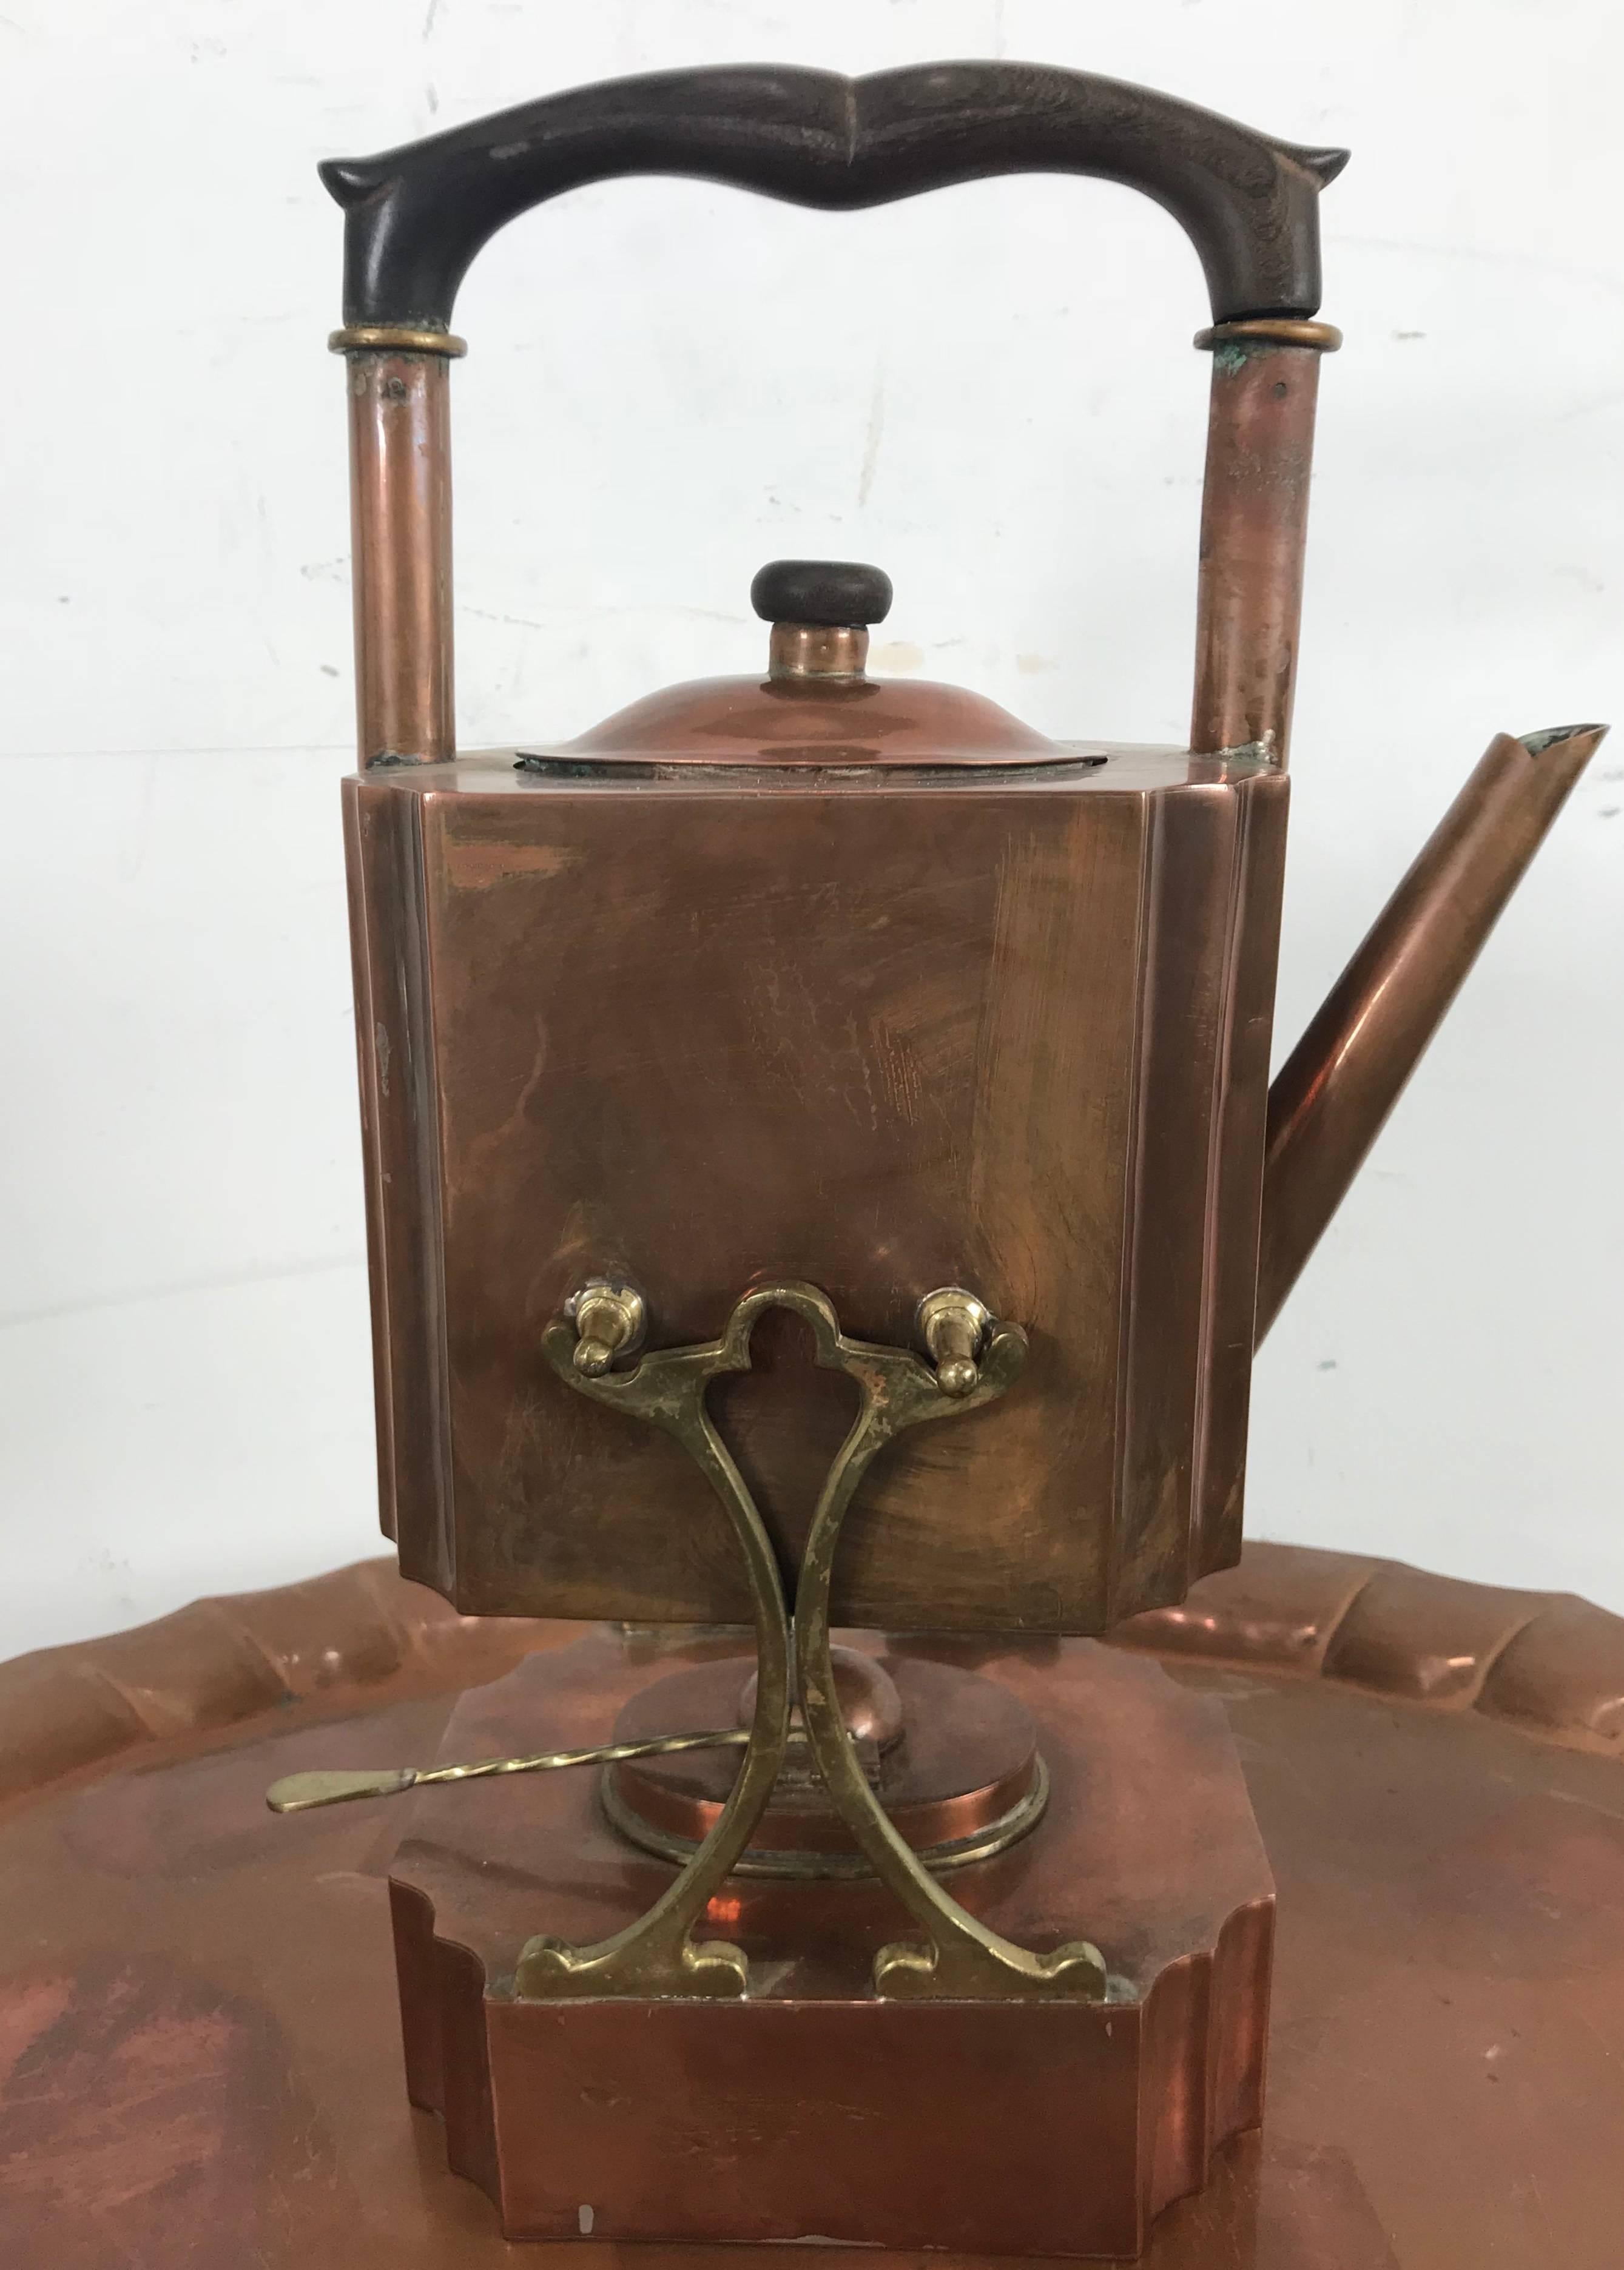 American Stylized Six-Piece Art Deco Copper Tea and Coffee Set Creamer, Sugar Tray